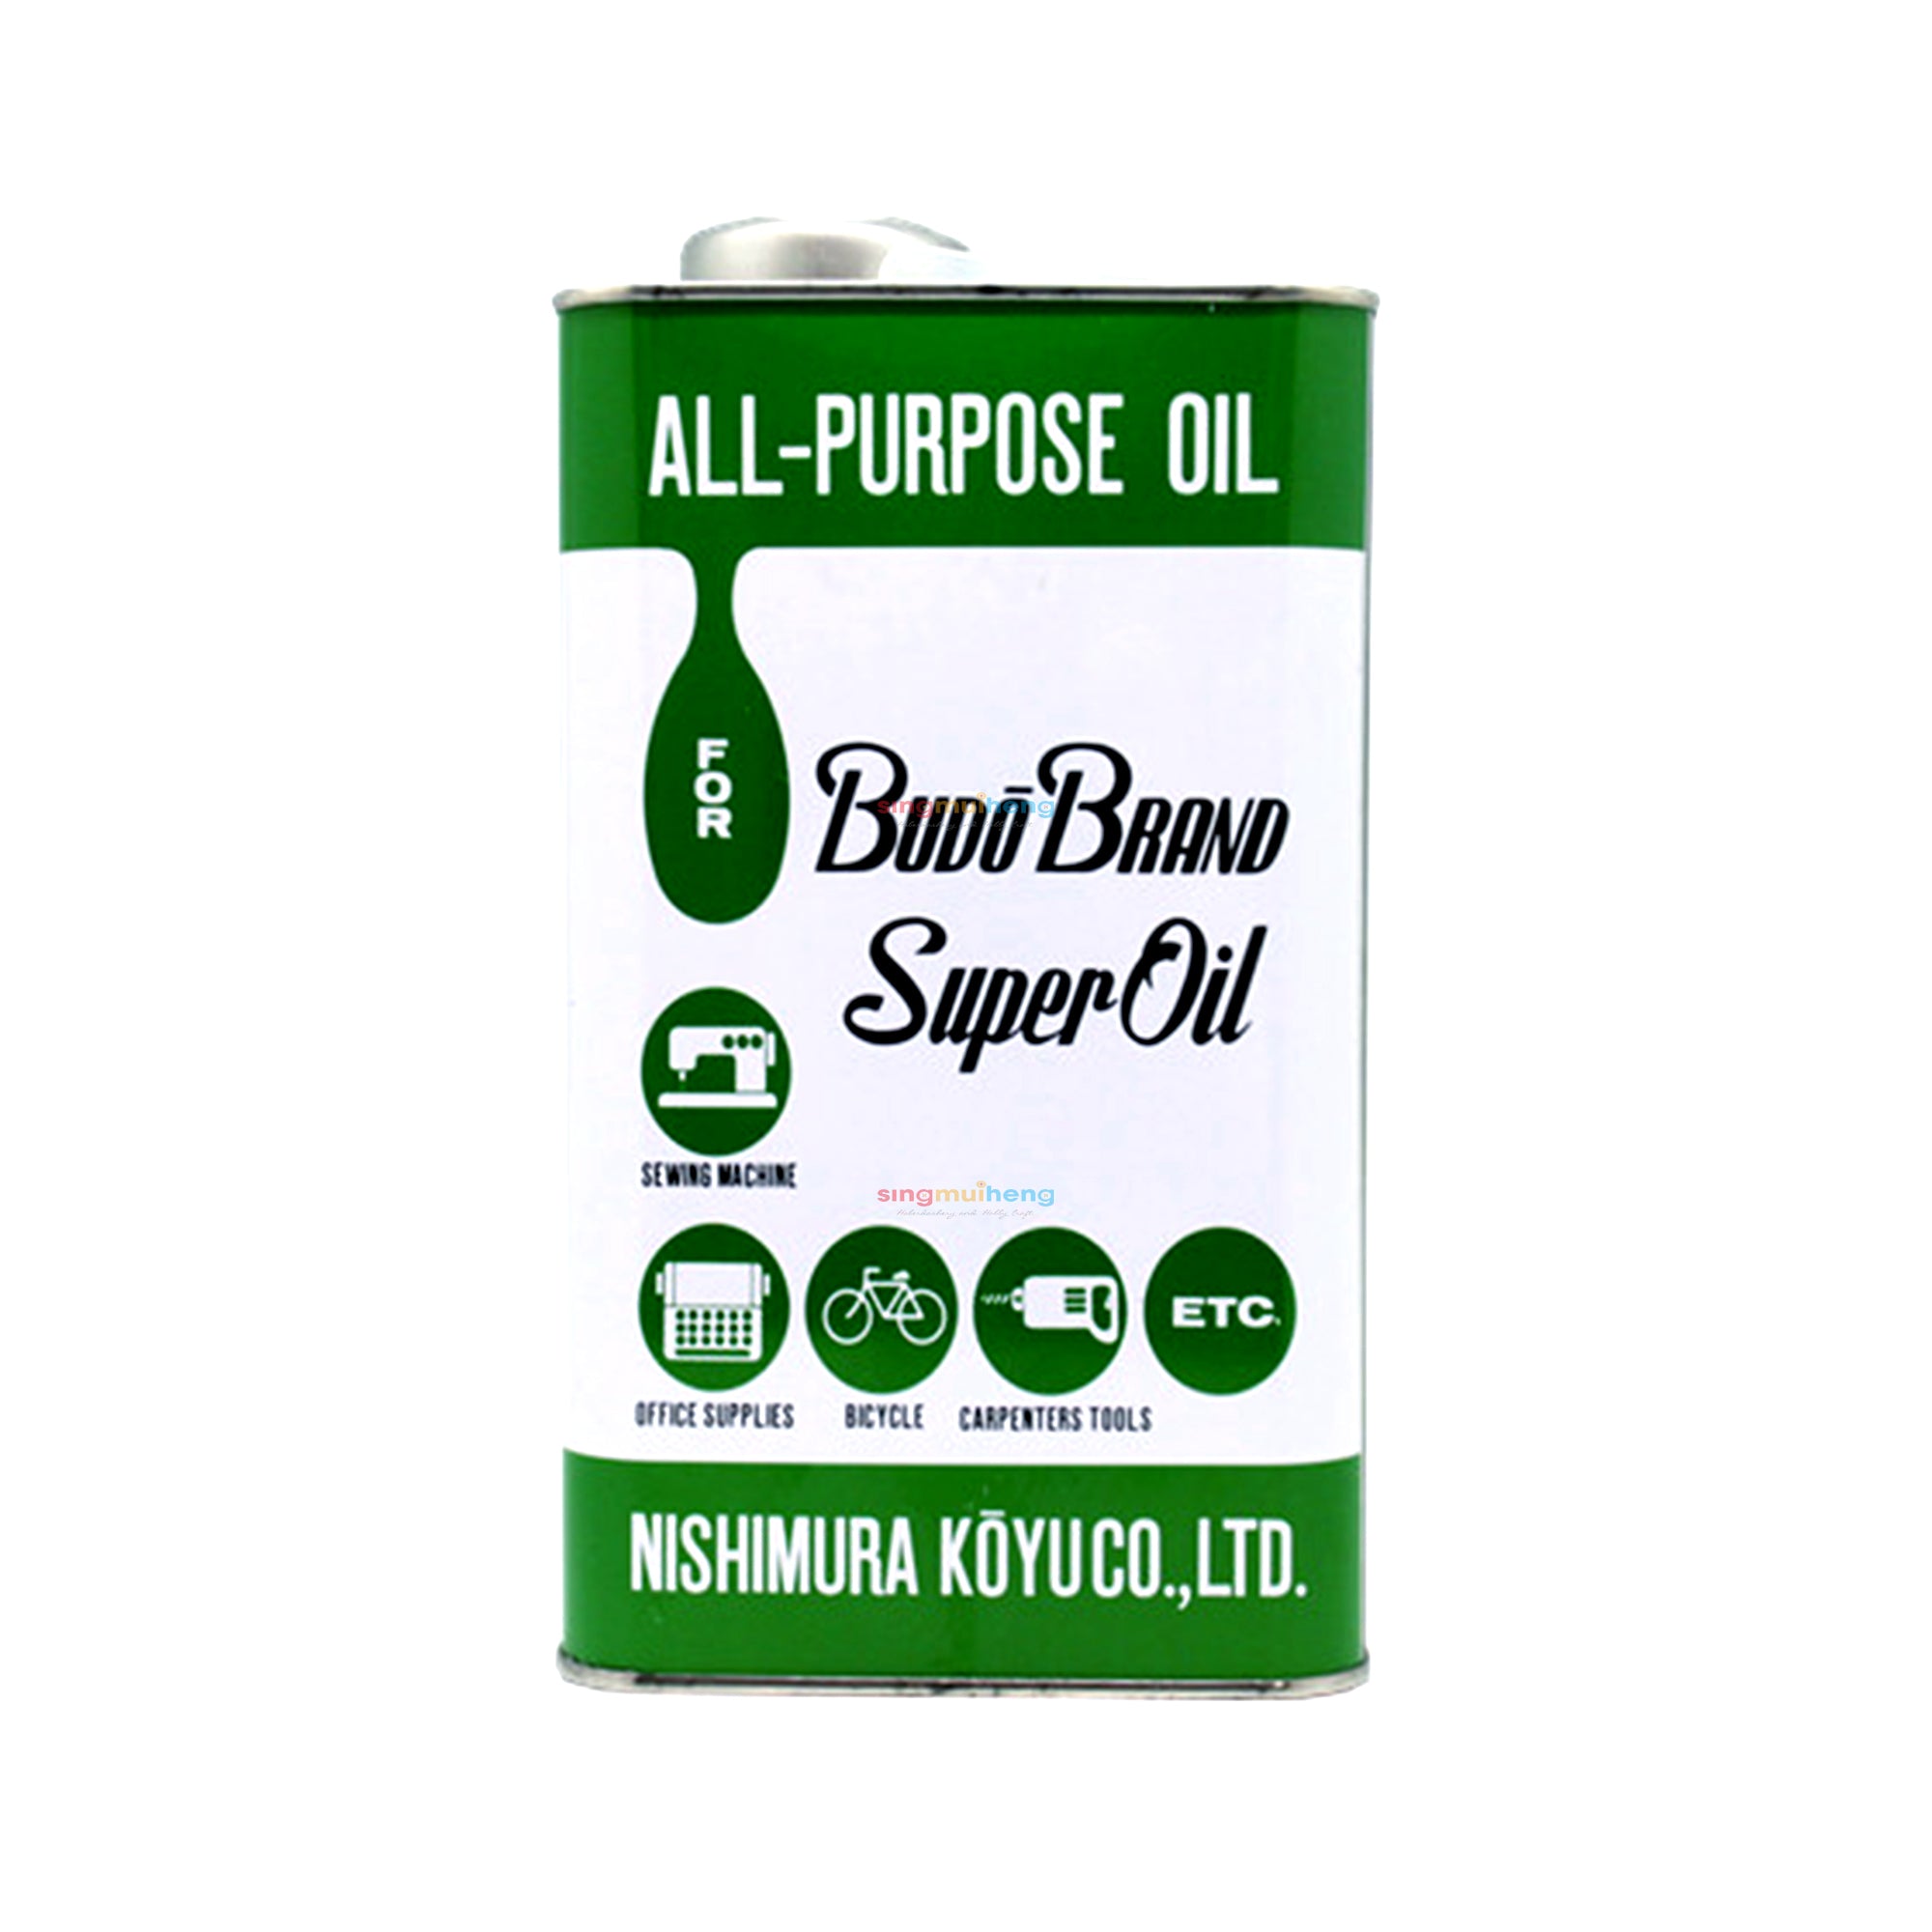 Budo Brand Super Oil - All Purpose Oil - 1 LTR - MY SEWING MALL